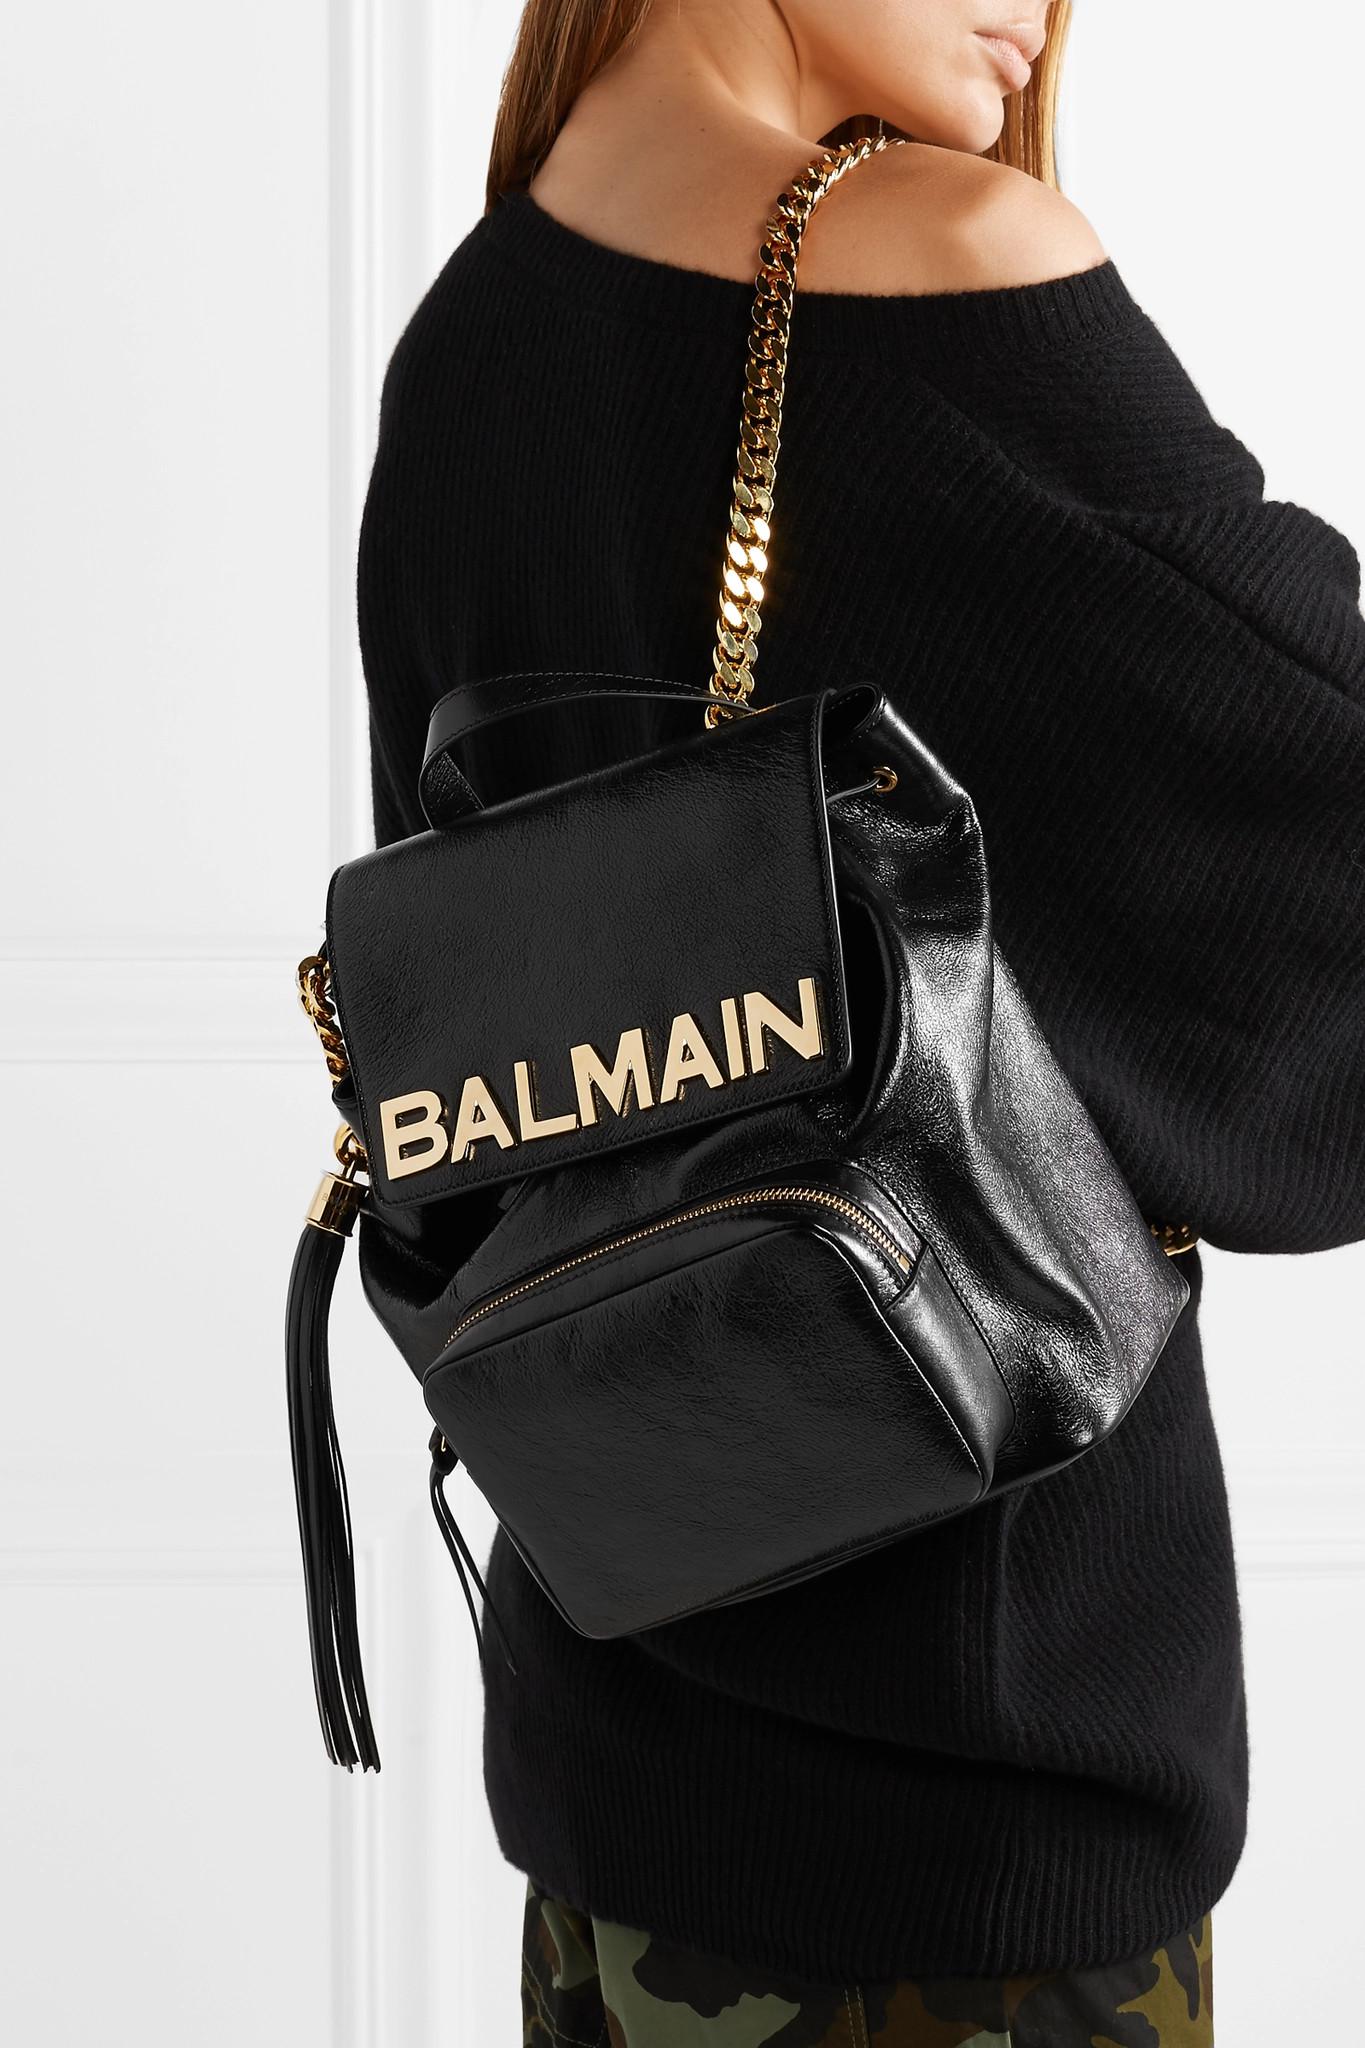 Balmain Leather Chain Backpack in Black | Lyst